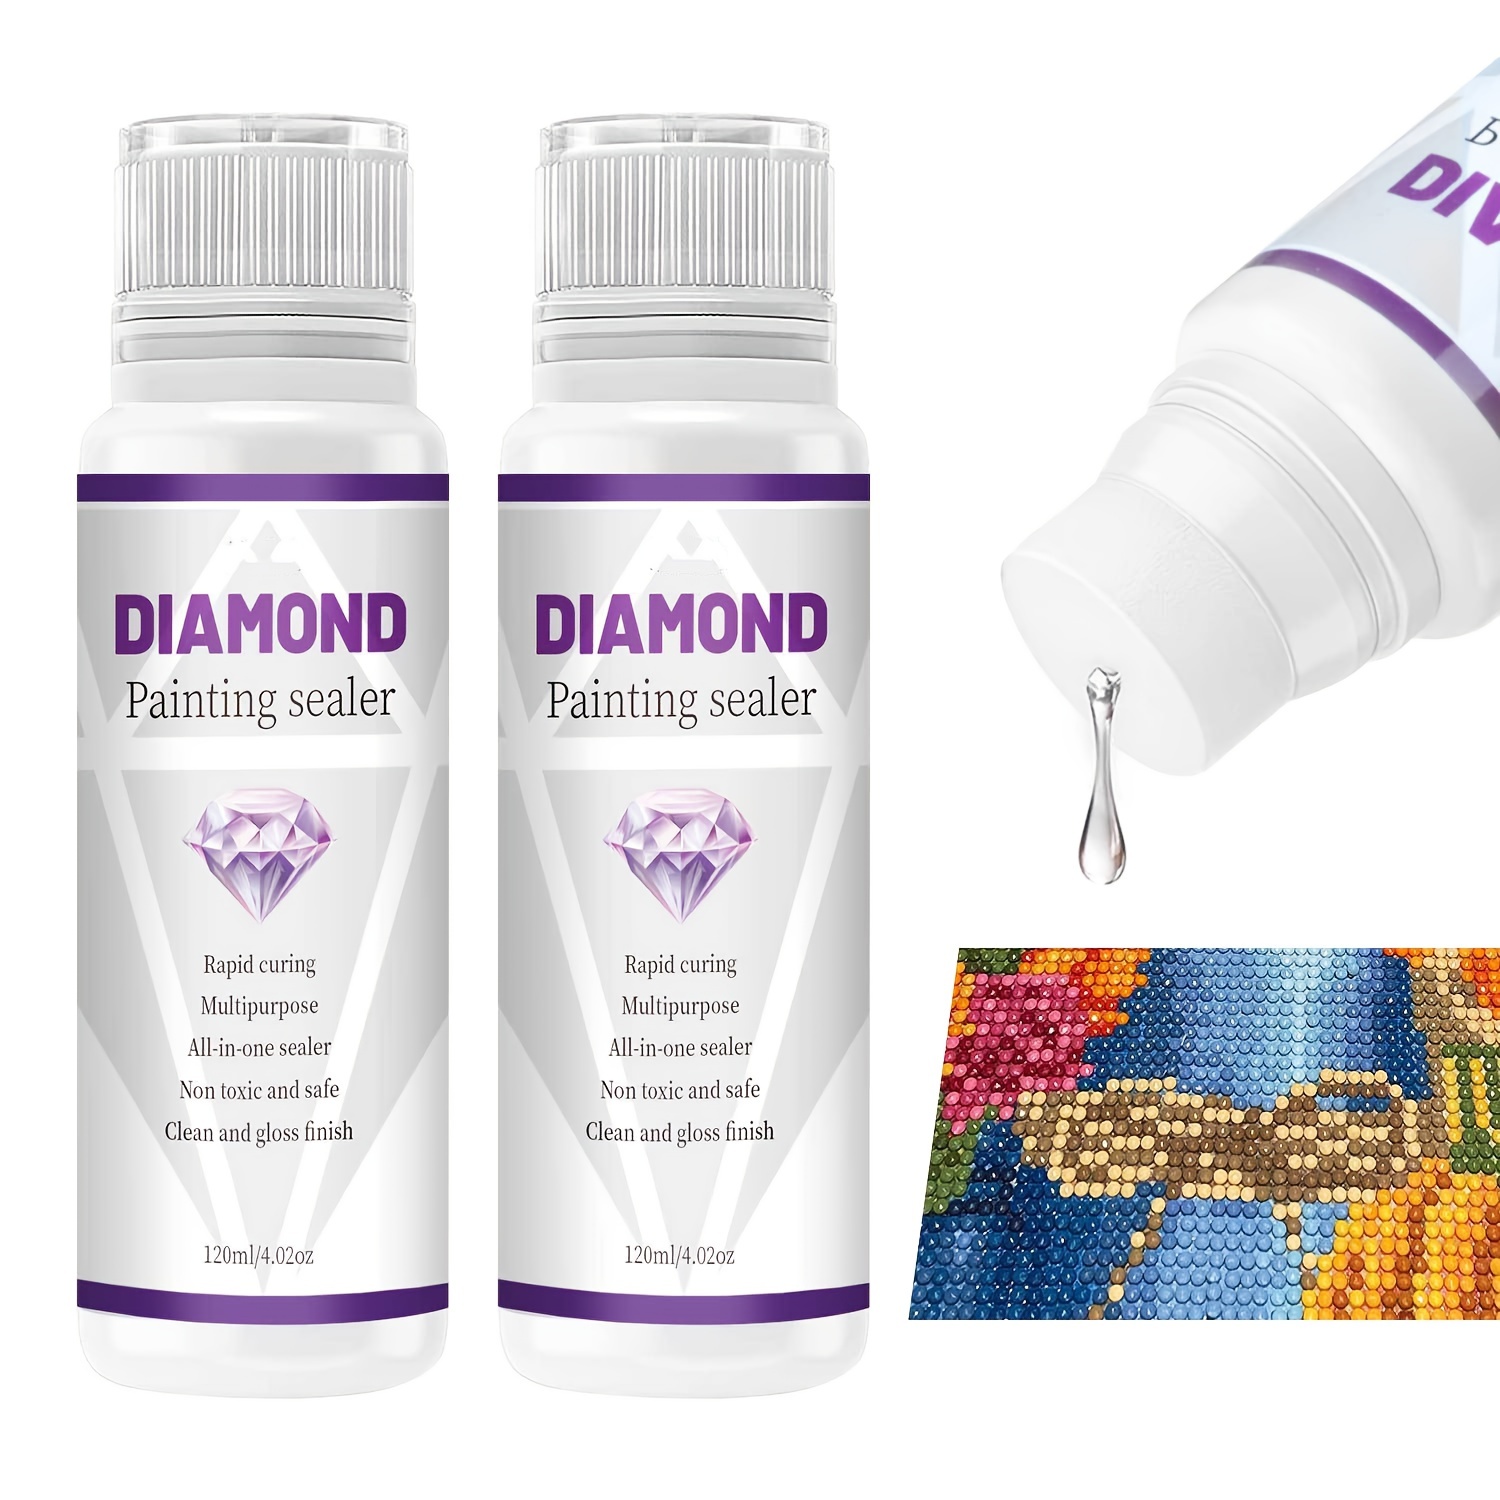 100ml 5D Diamond Painting Glue Sealer for Diamond Painting Conserver Arts A